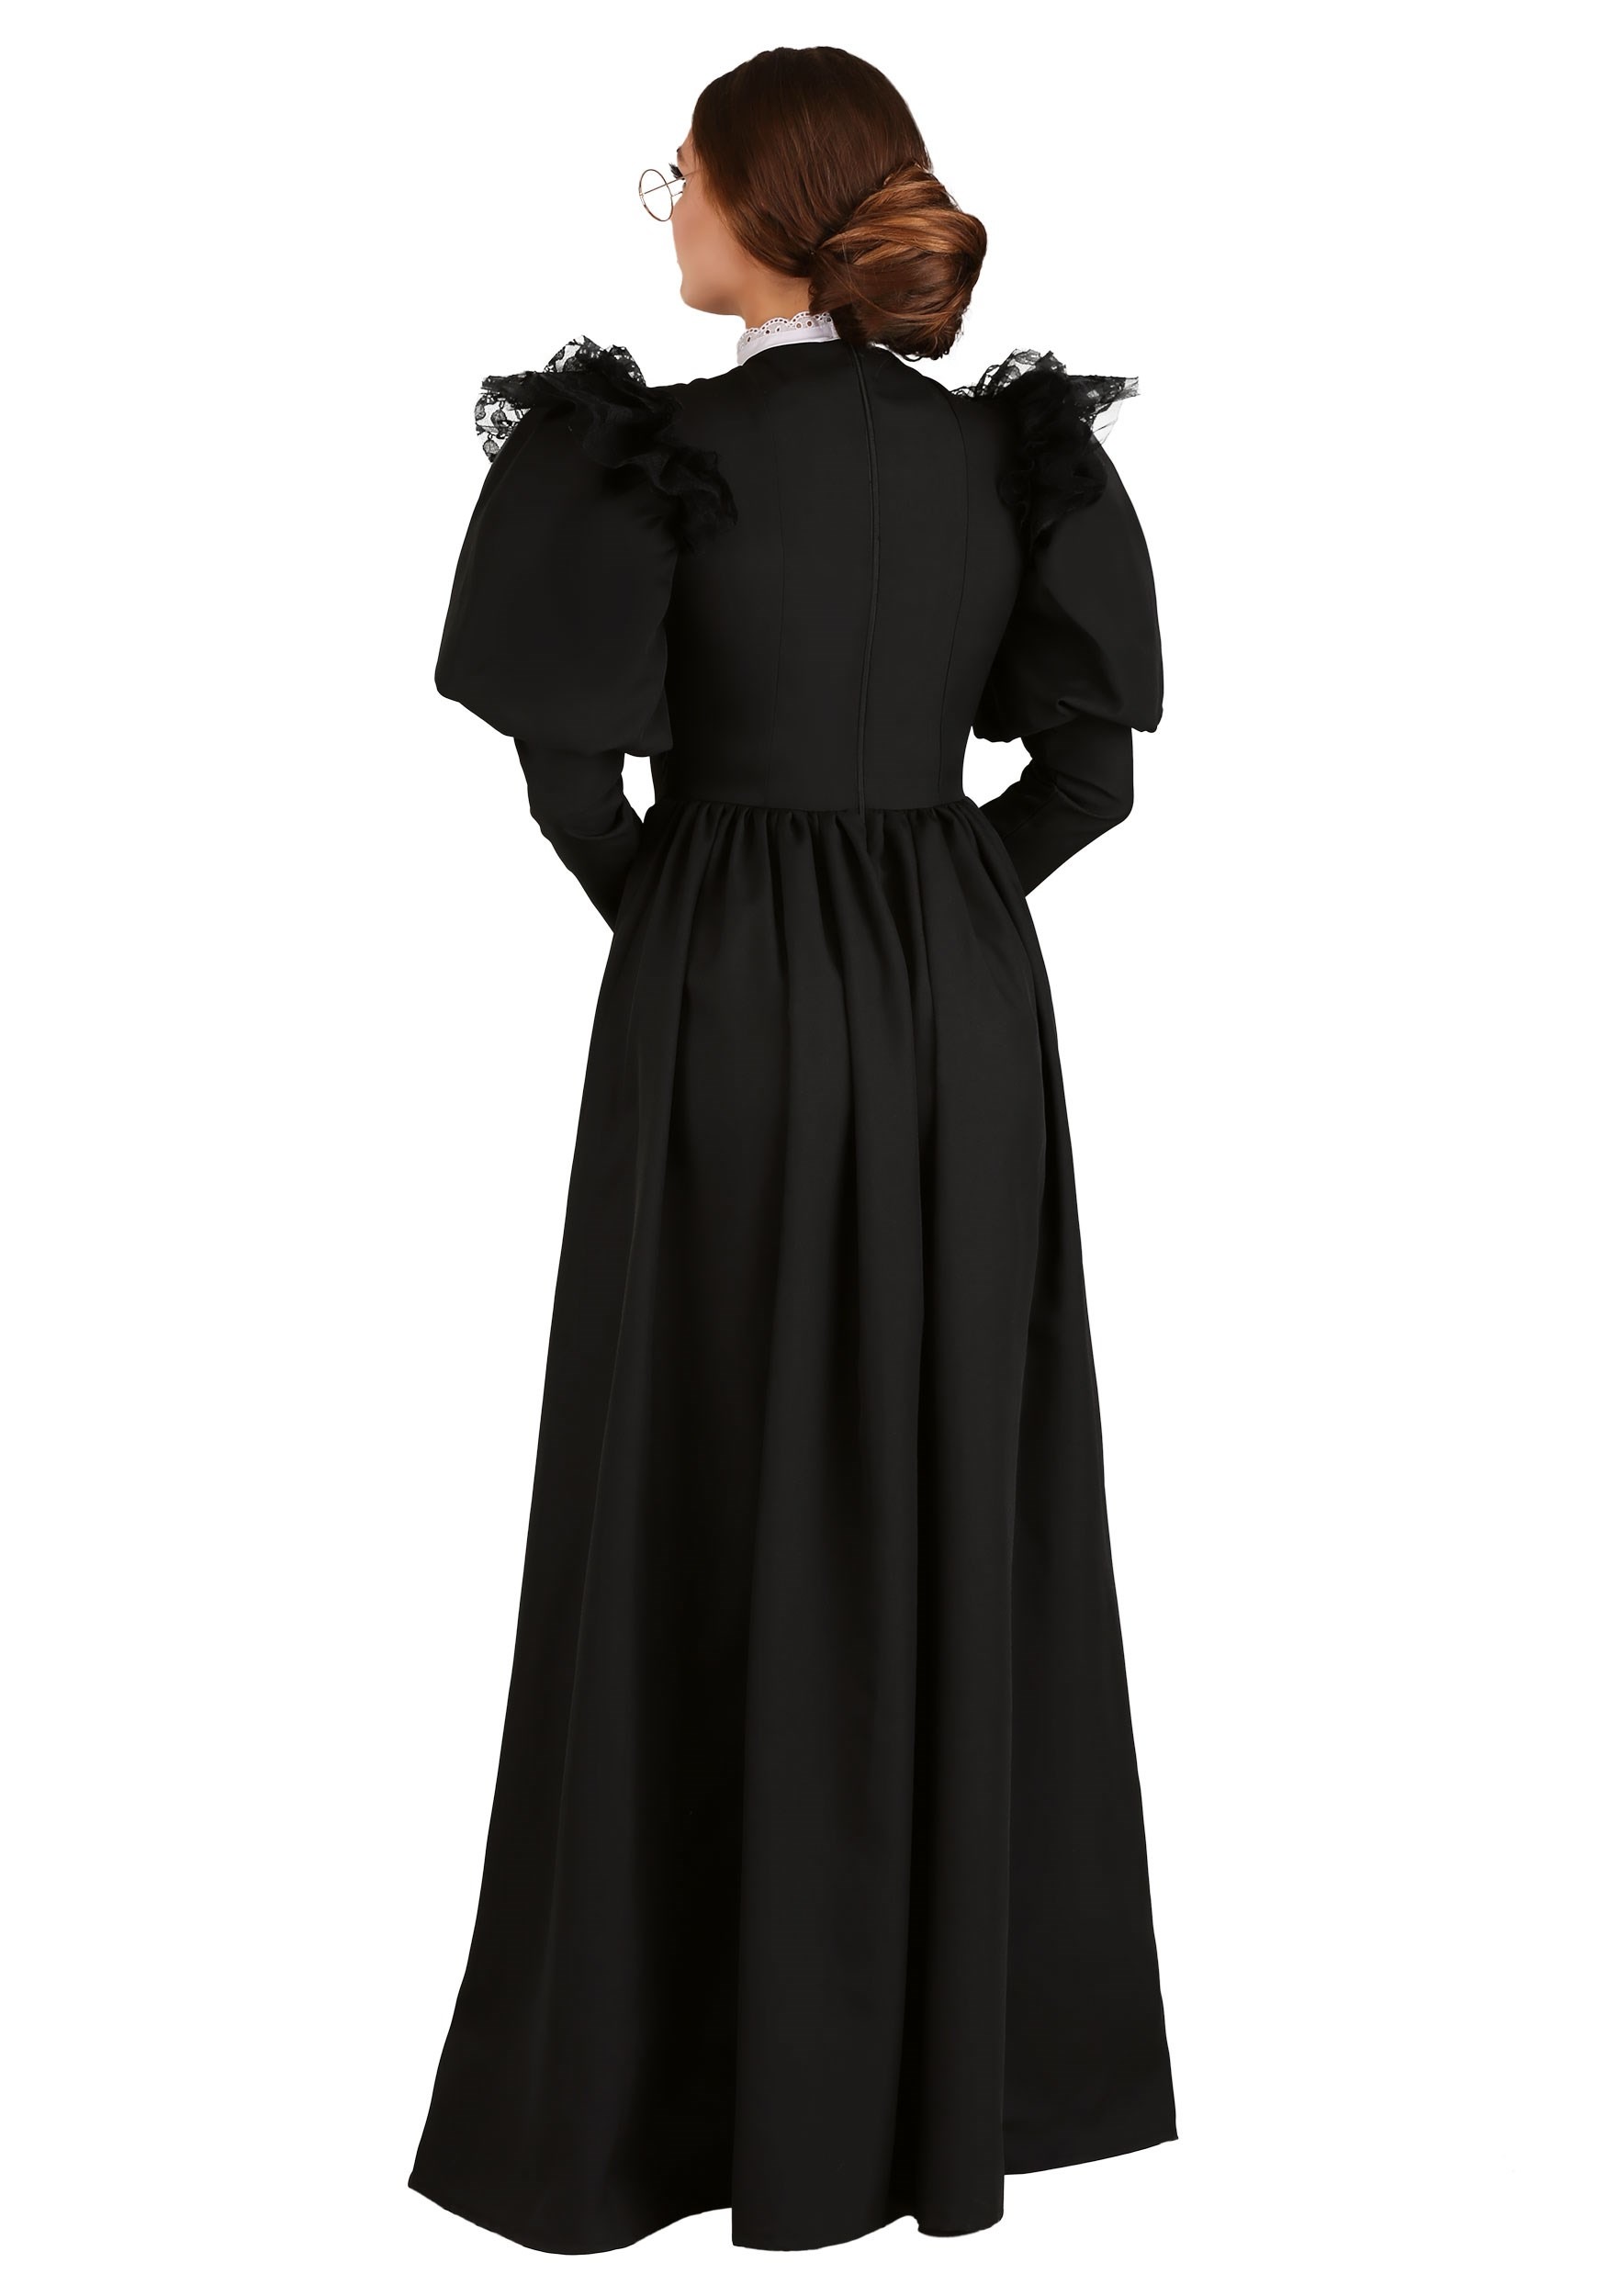 Susan B. Anthony Fancy Dress Costume For Women